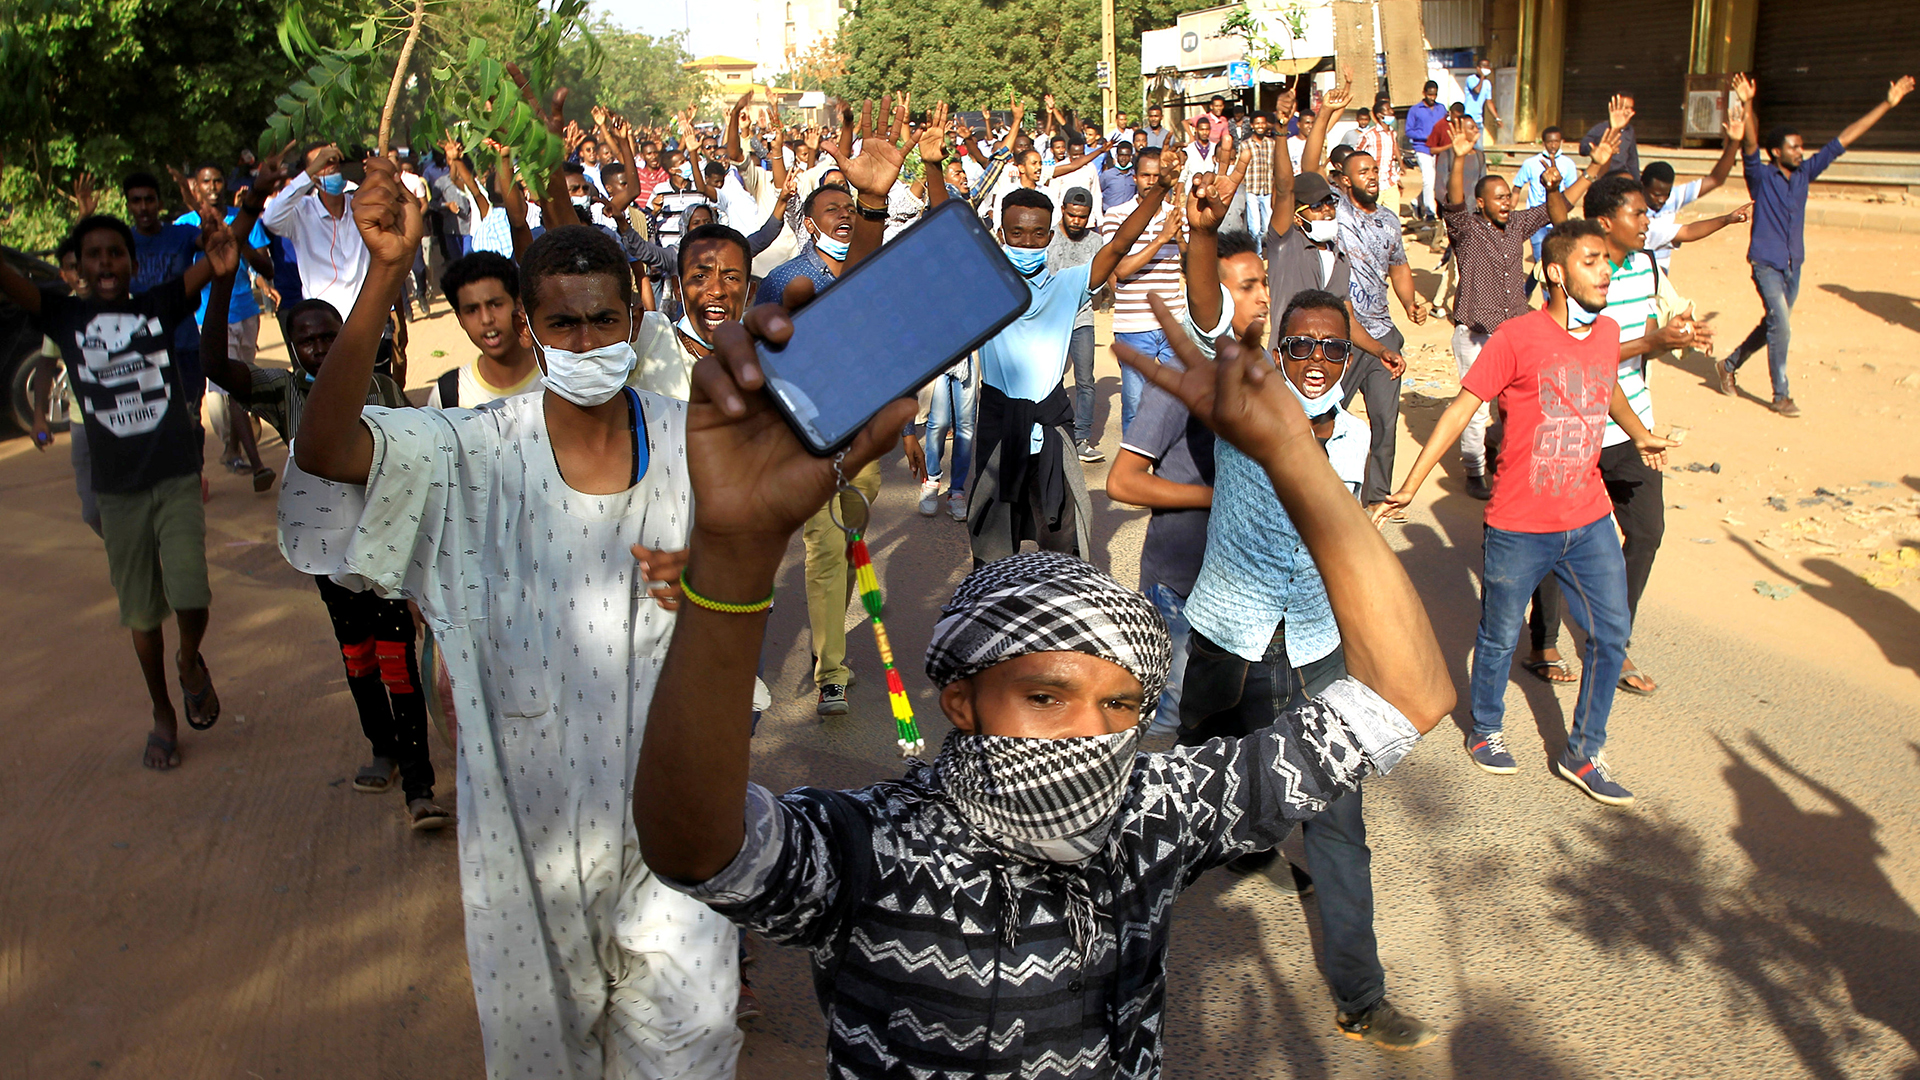 Demonstranten in Khartum | Bildquelle: REUTERS